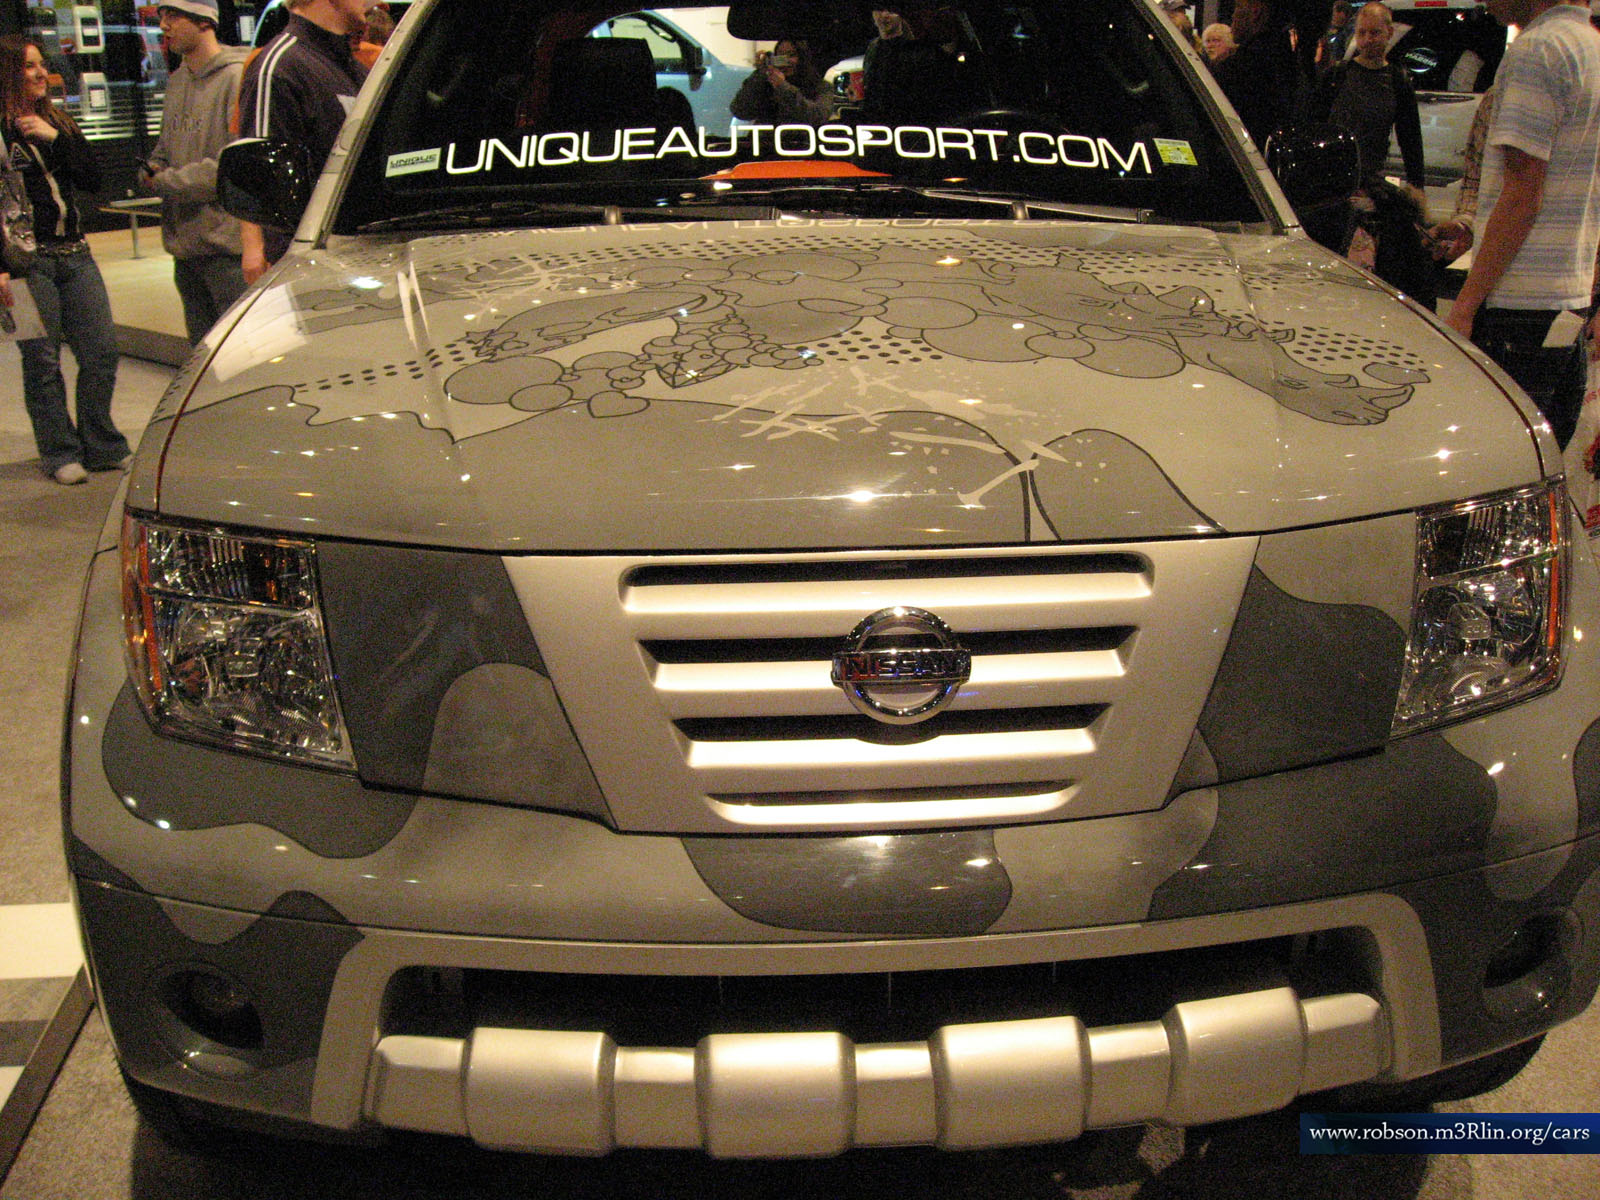 Nissan Pathfinder XE